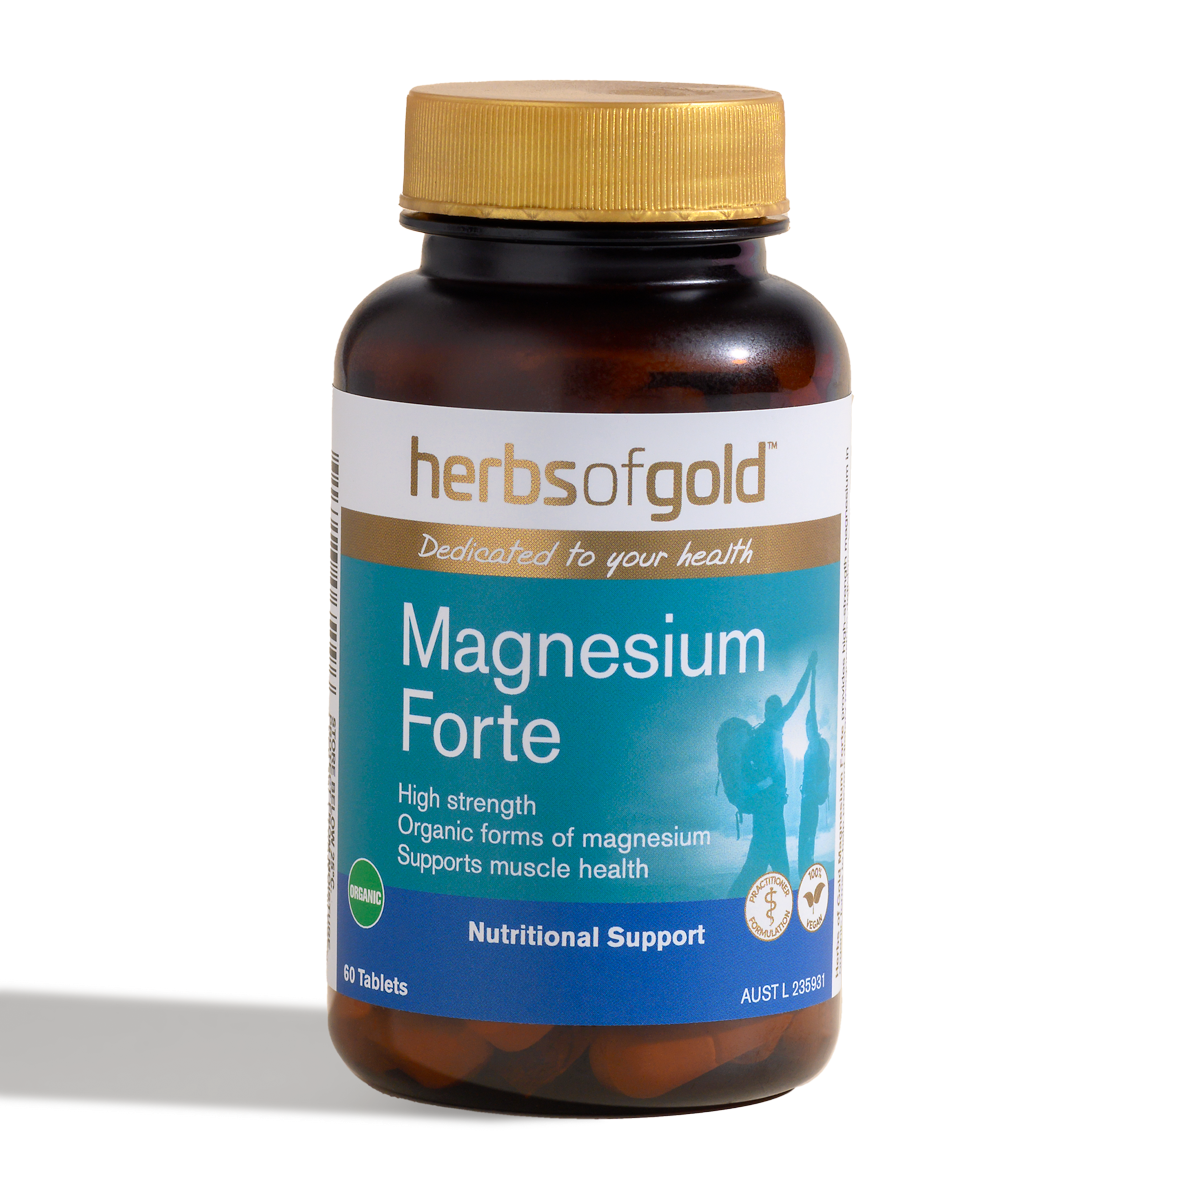 Herbs of Gold Magnesium Forte Organic